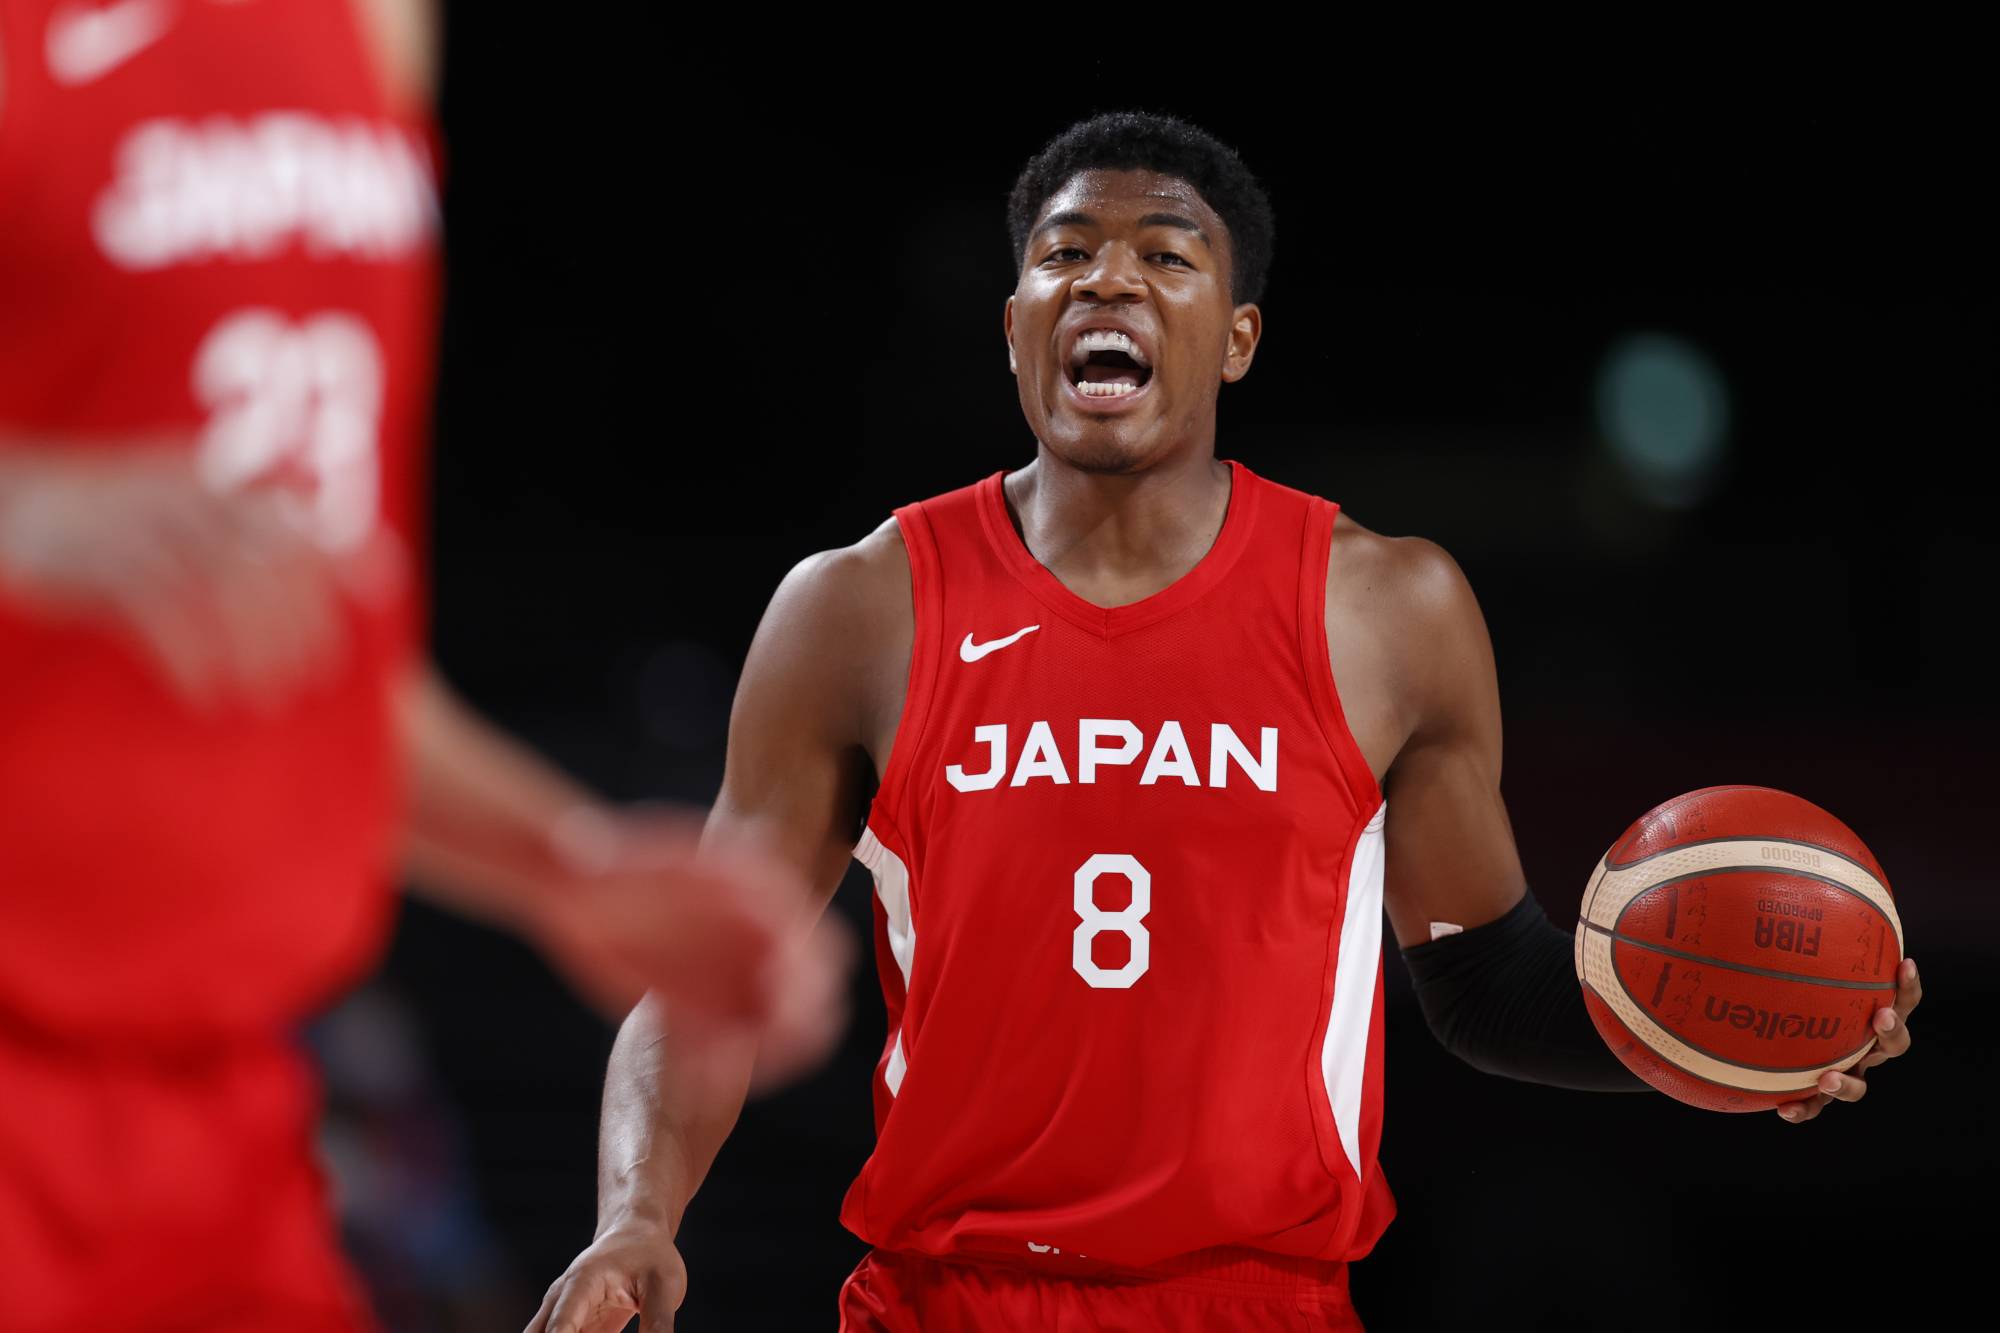 Basketball: Rui Hachimura admits struggling in return to court